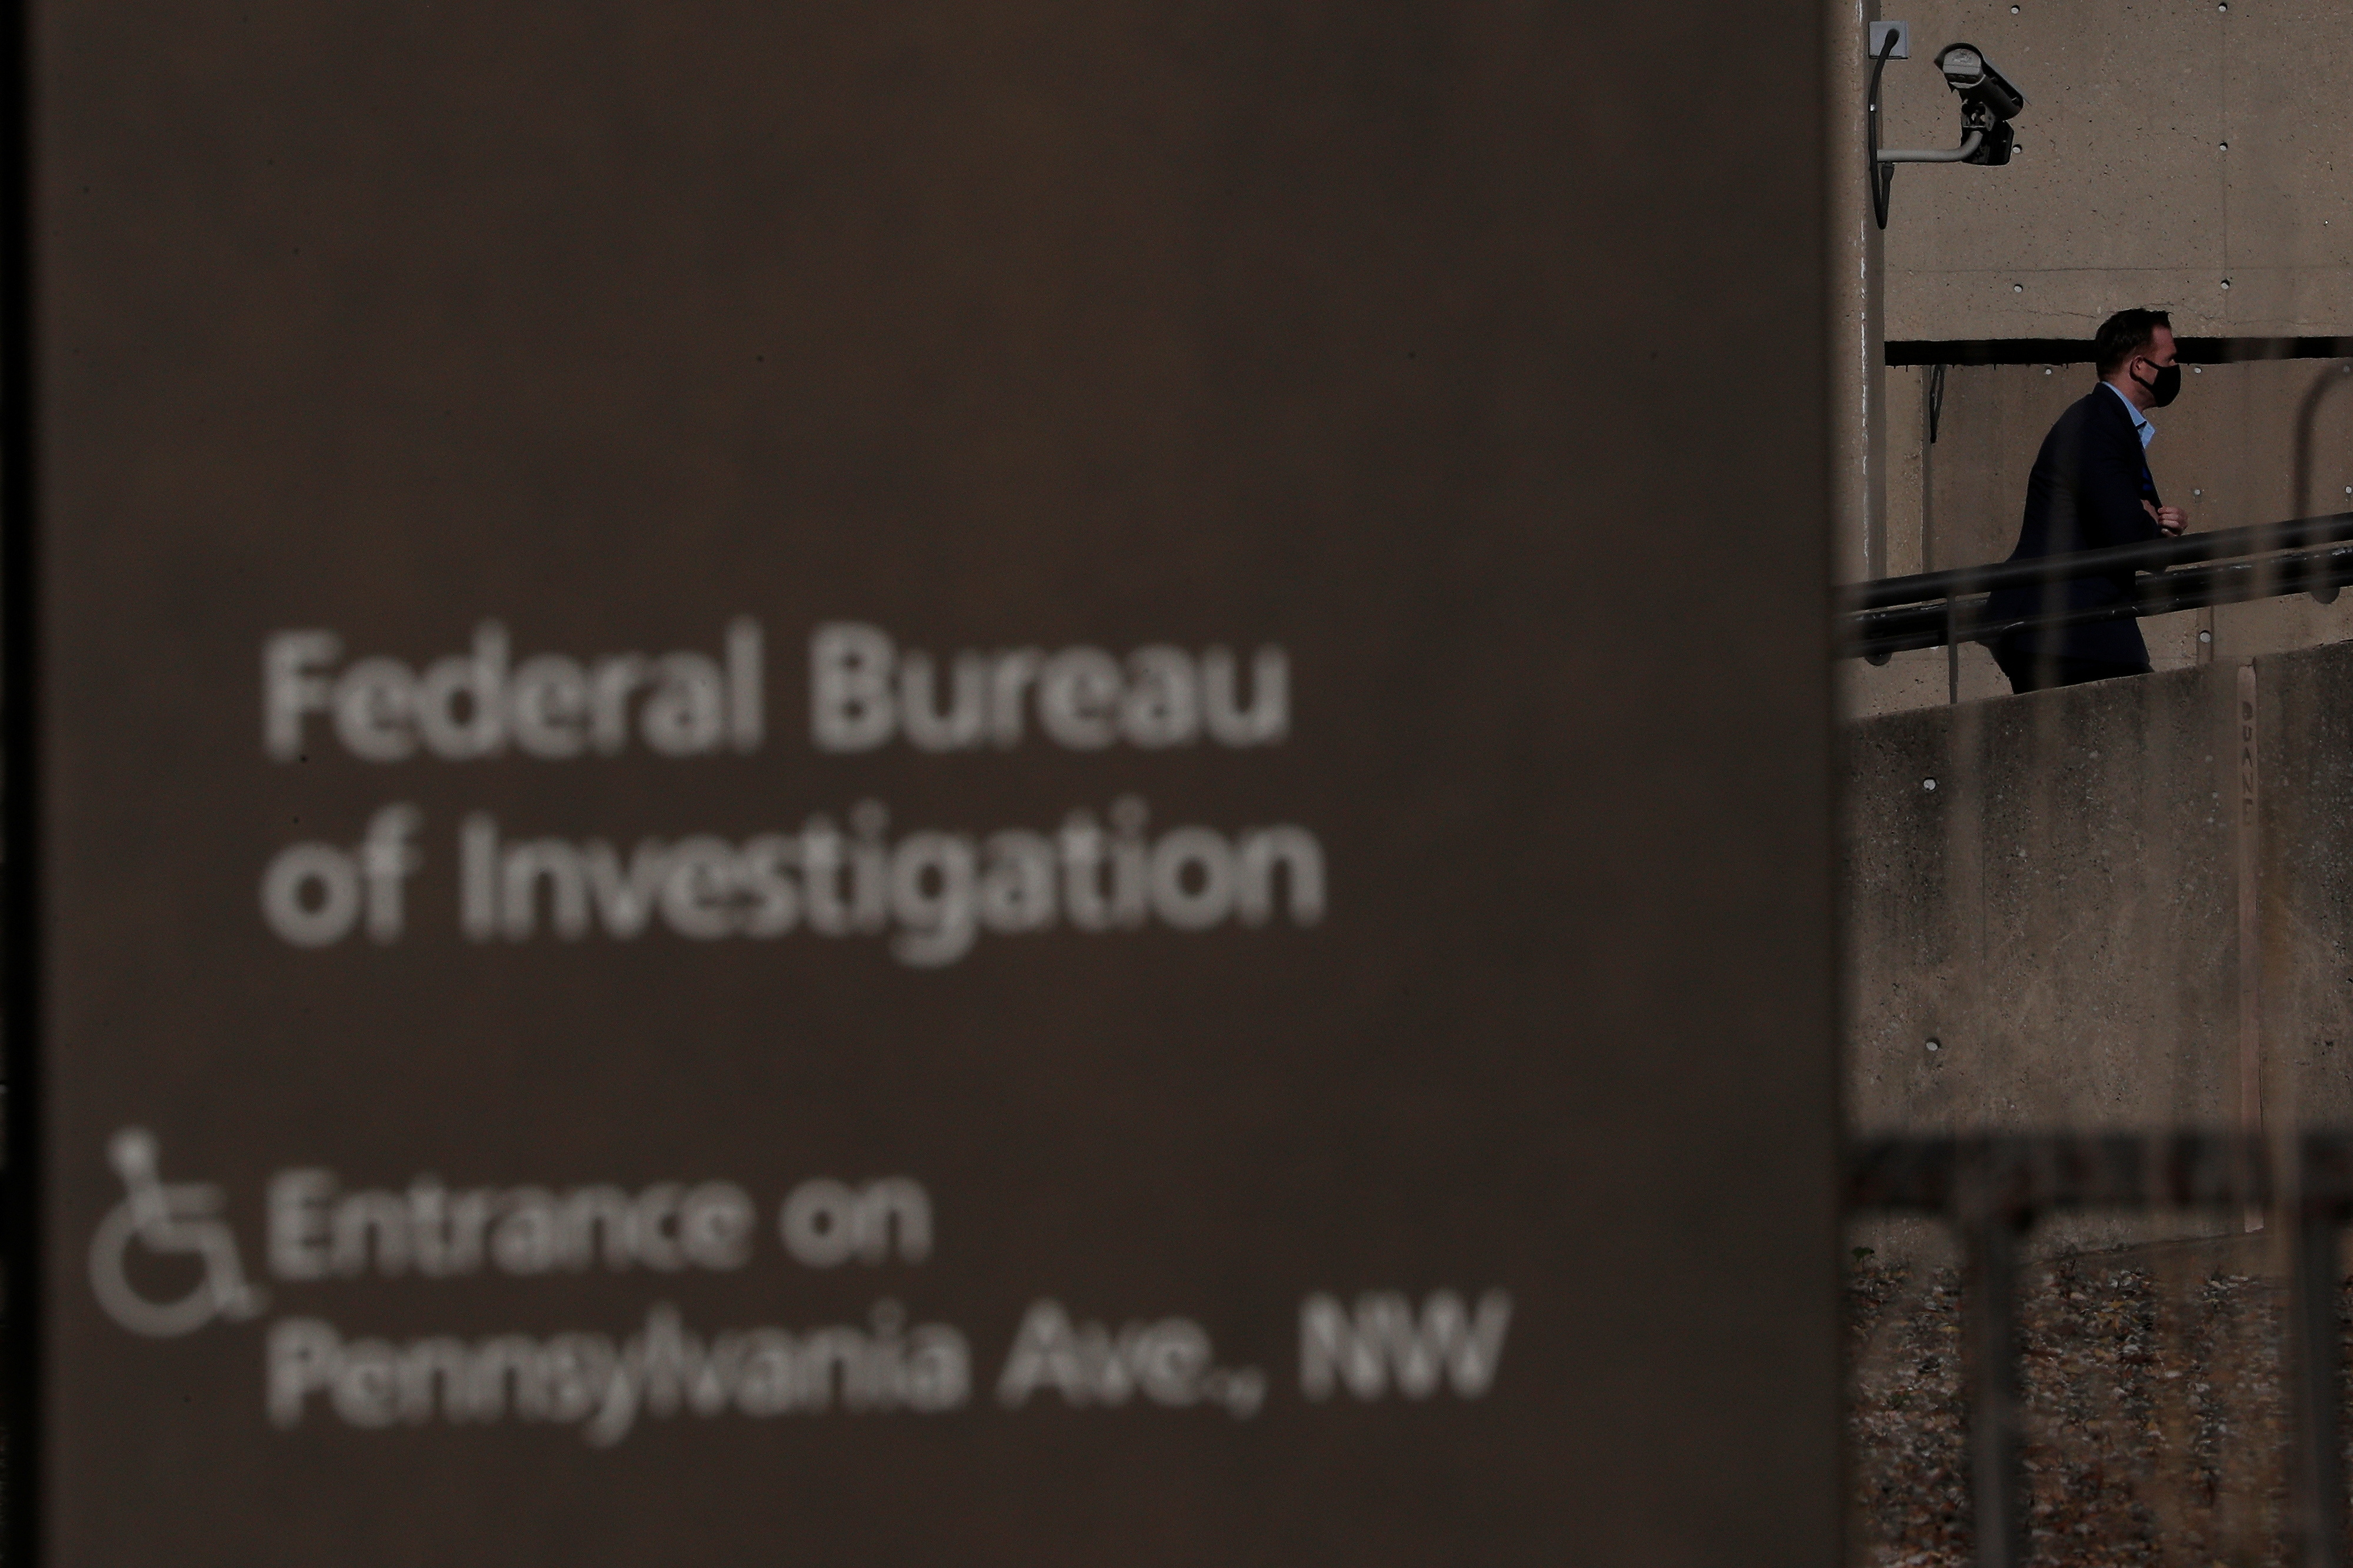 A pedestrian walks past the J. Edgar Hoover FBI Building in Washington